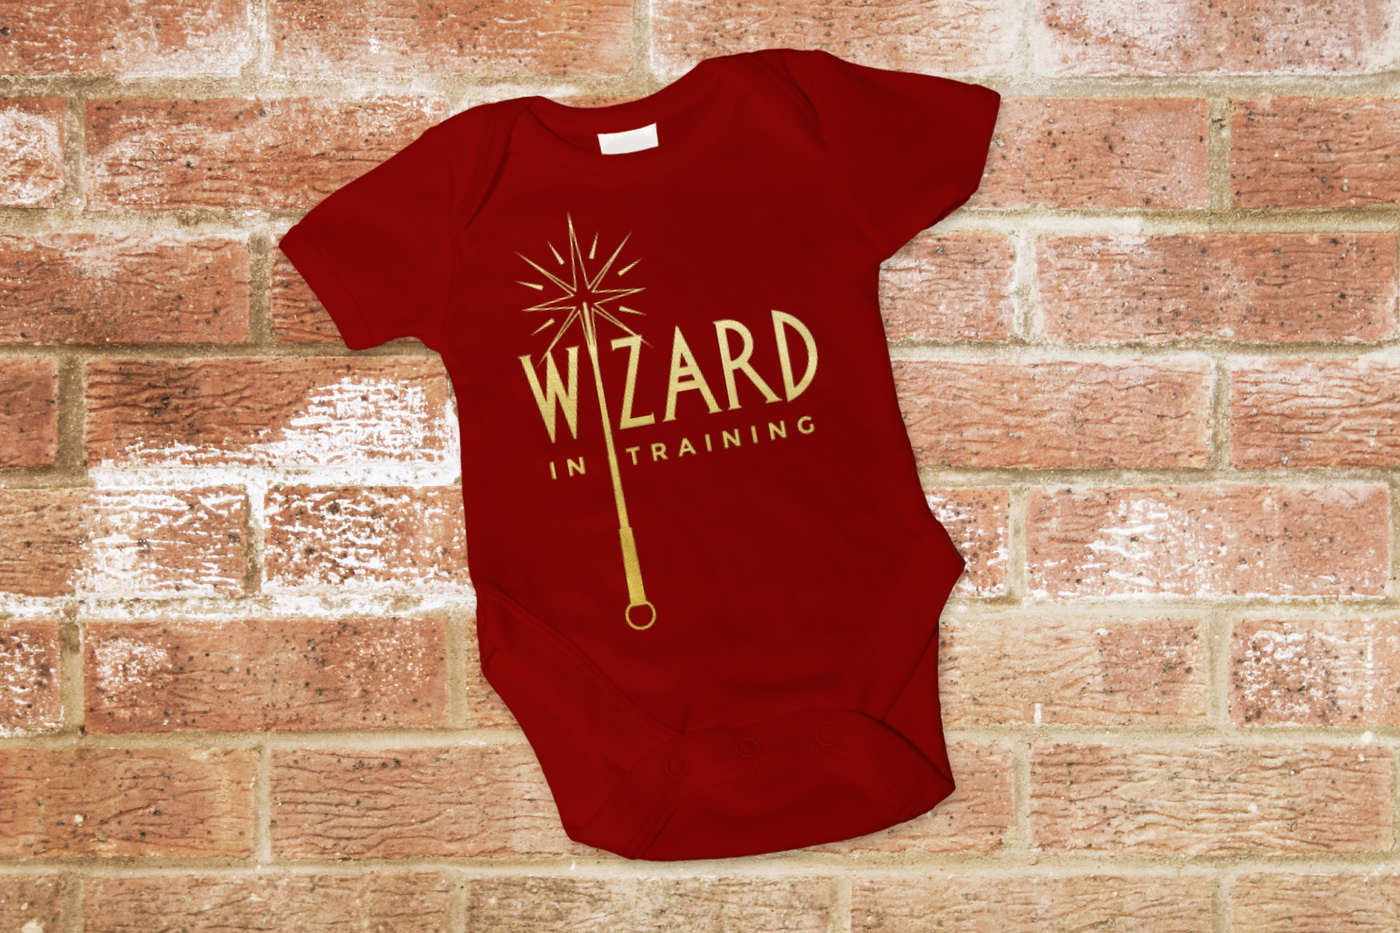 Wizard in training design